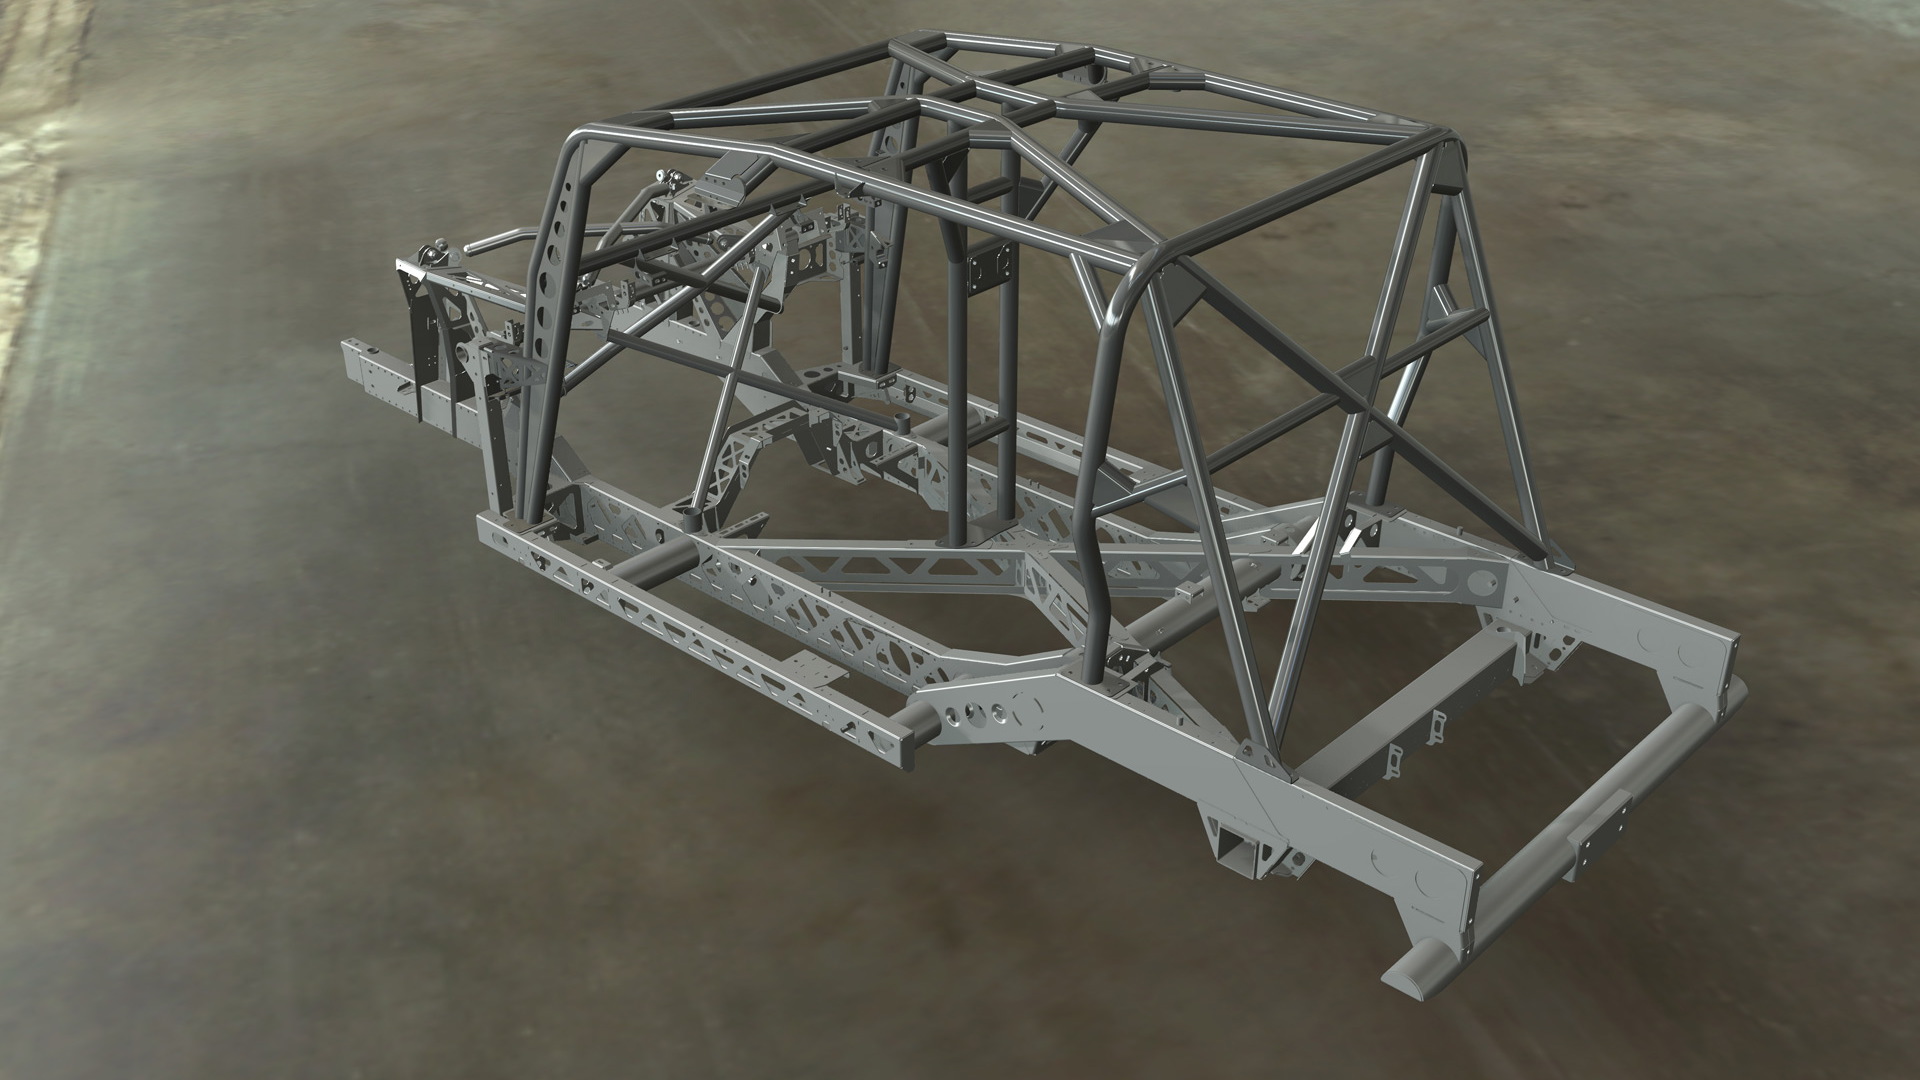 Bowler to build performance SUVs using the original Land Rover Defender 110 body